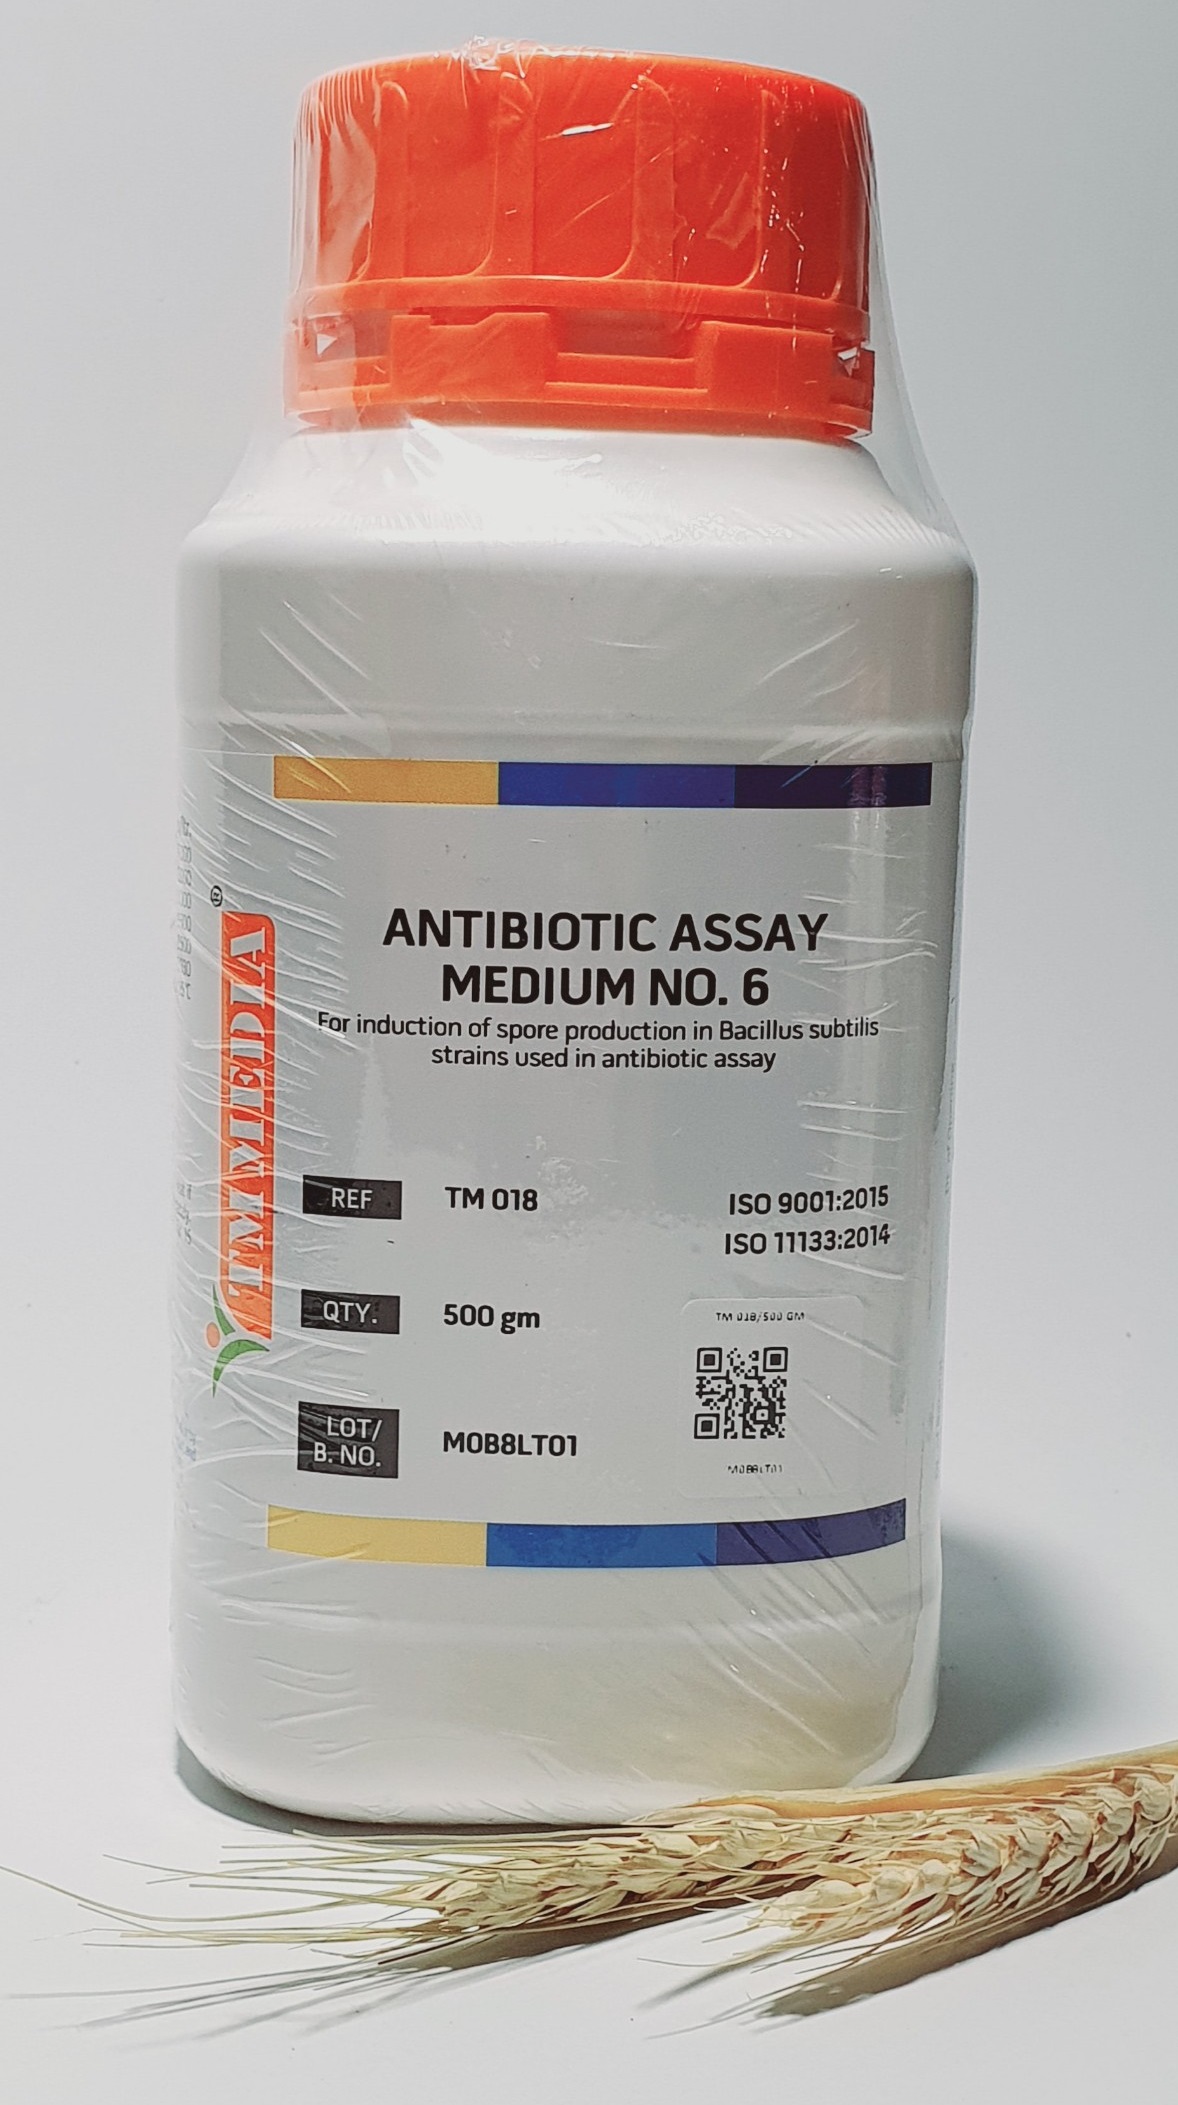 Antibiotic Assay Medium No. 6